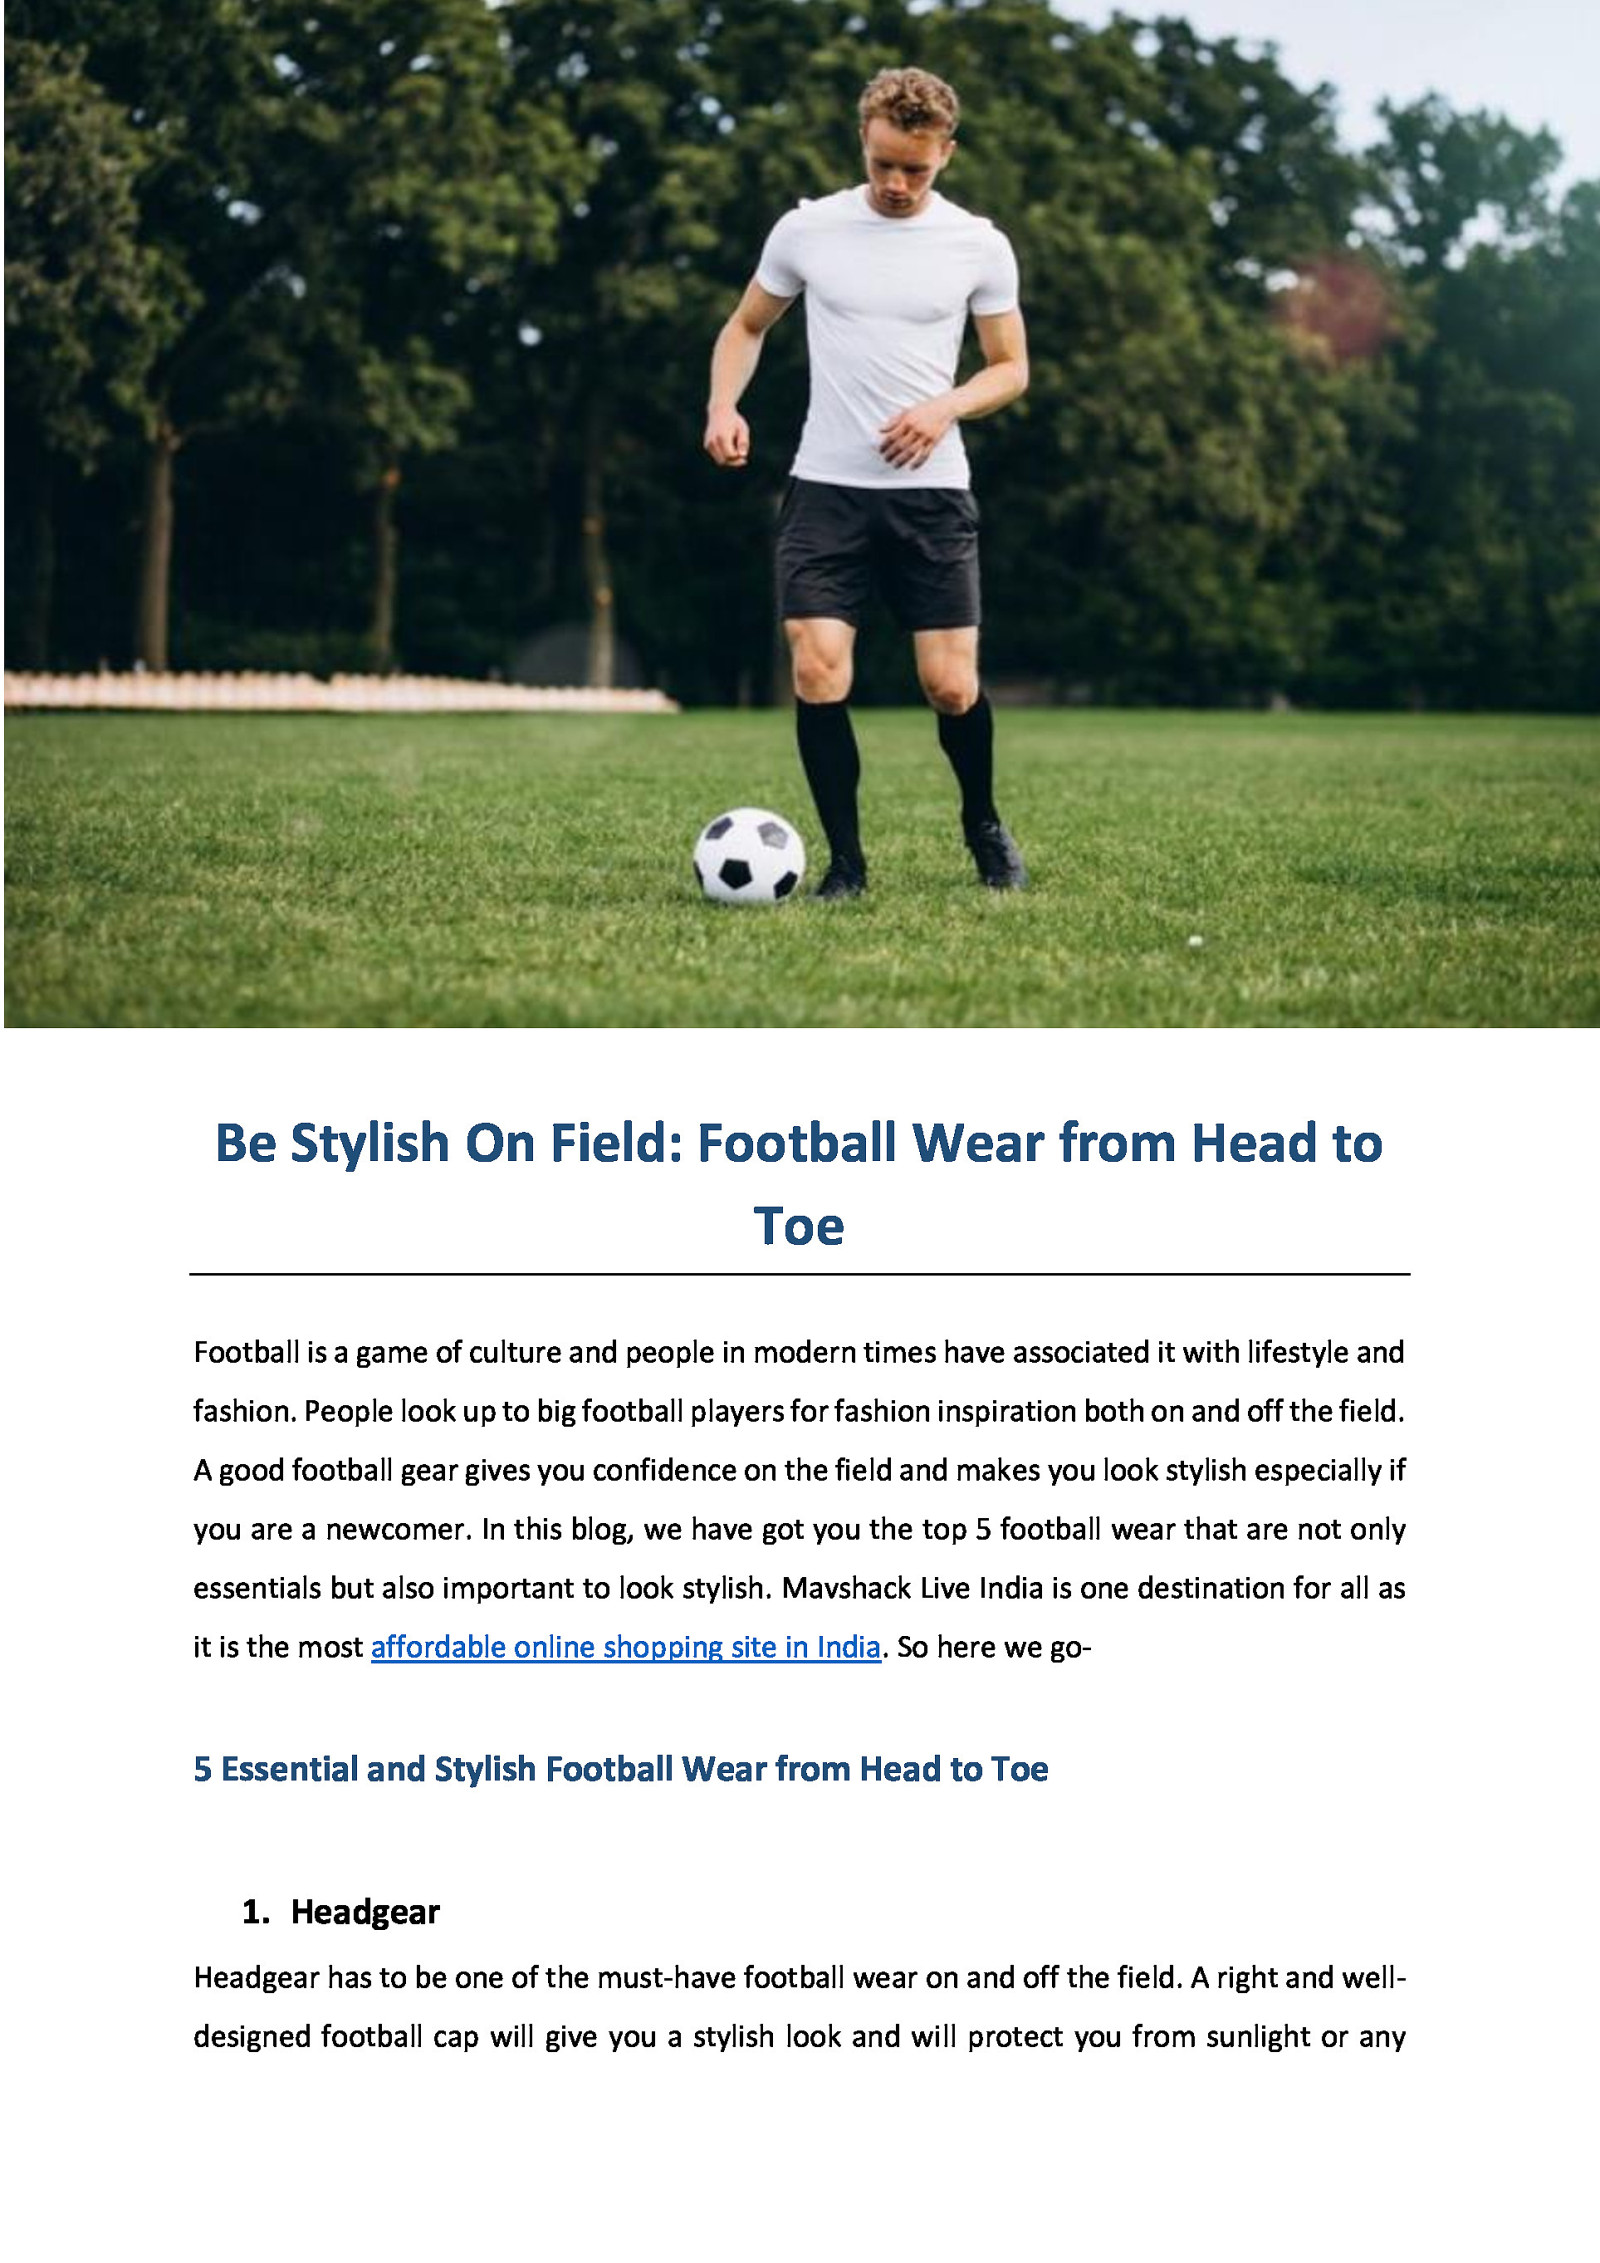 Be Stylish On Field: Football Wear from Head to Toe